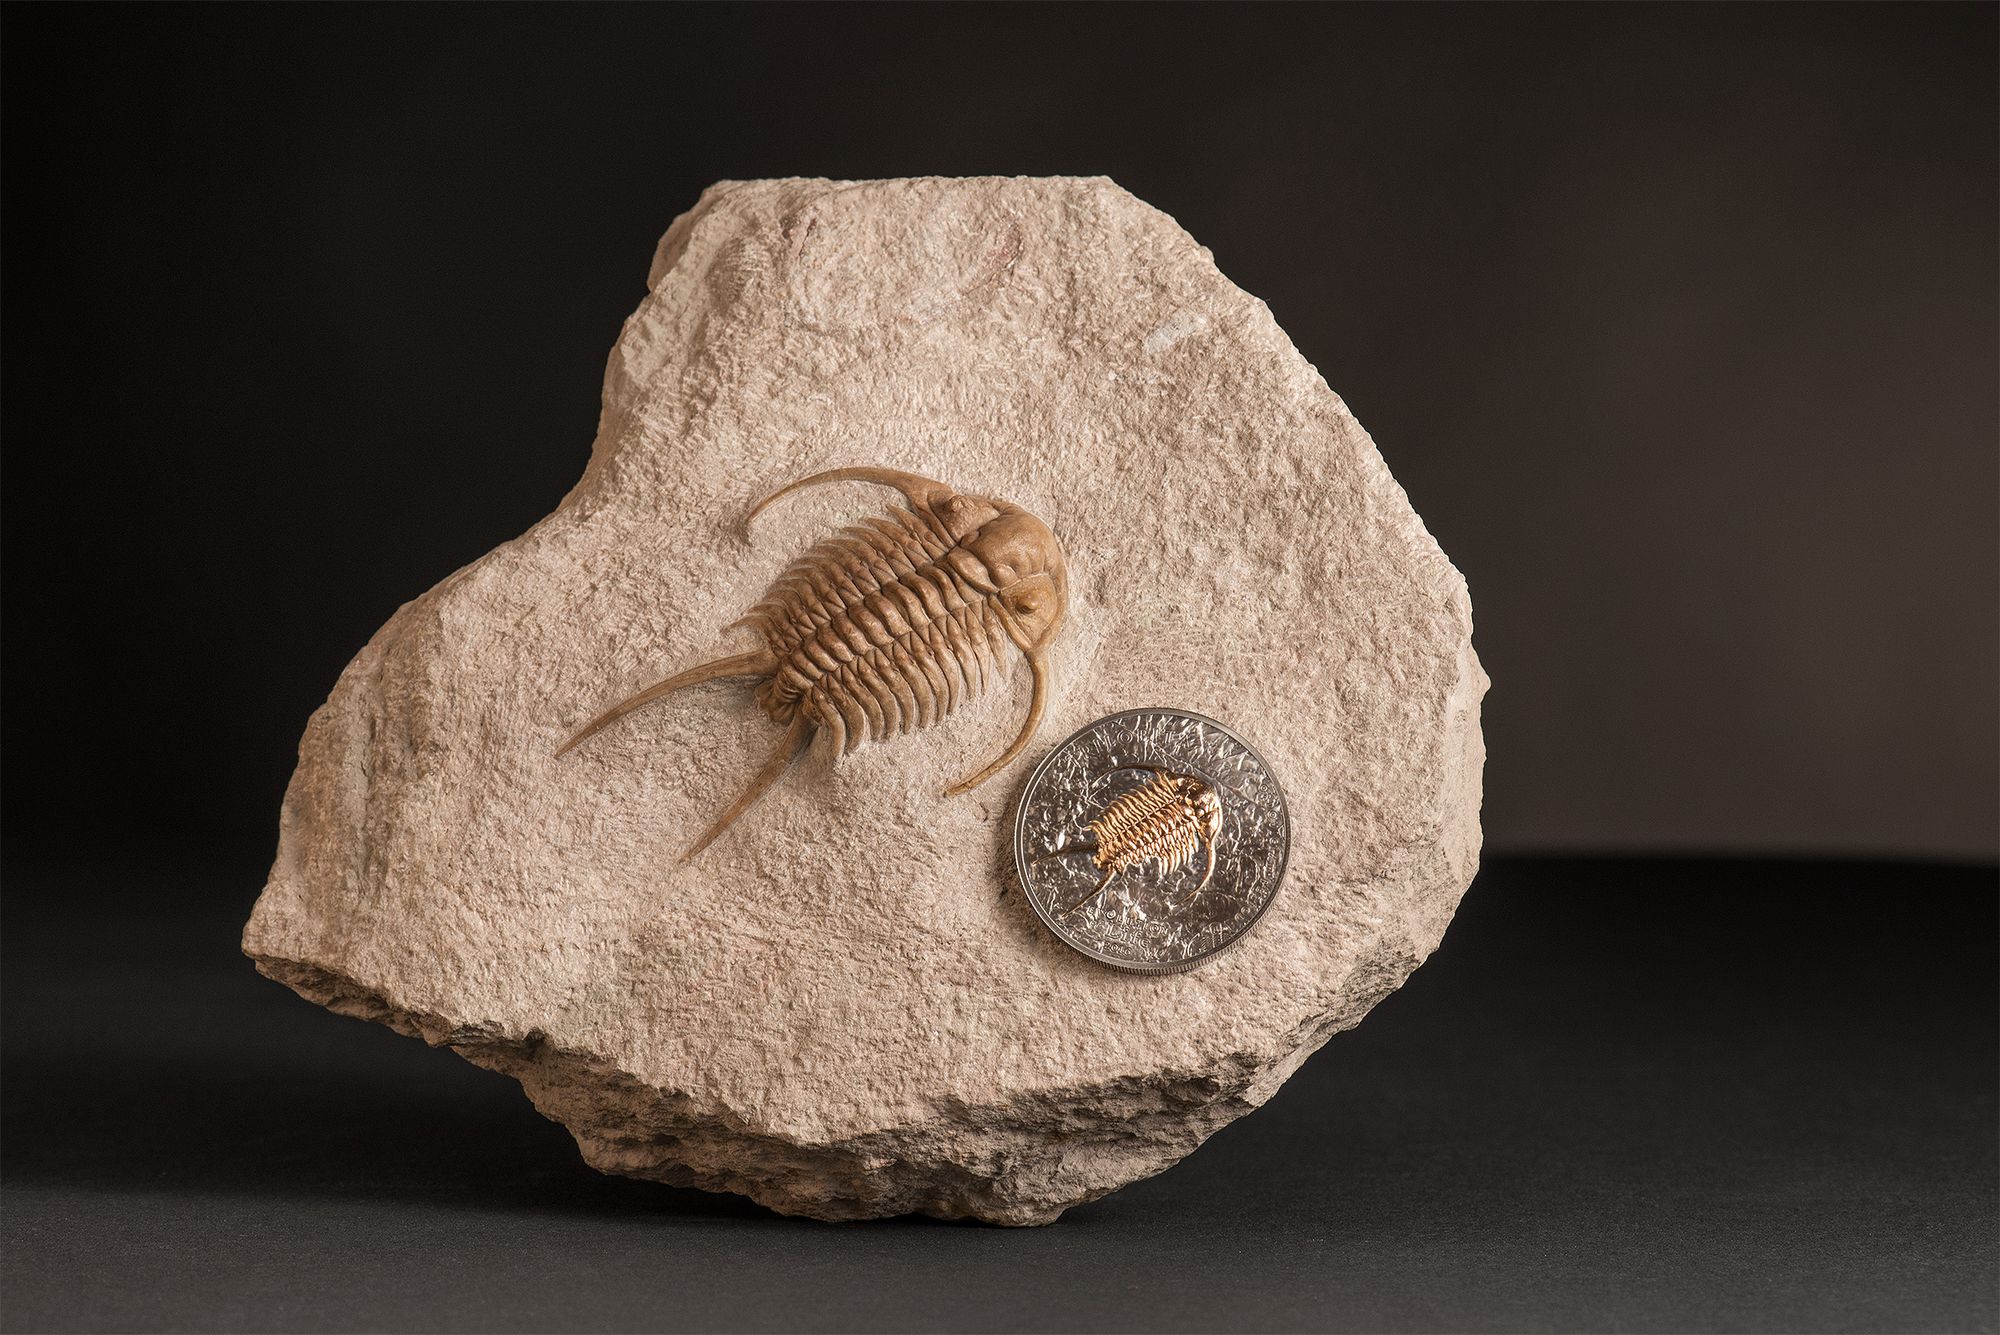 2016 Evolution of Life Trilobite Fossil 1oz Silver Coin